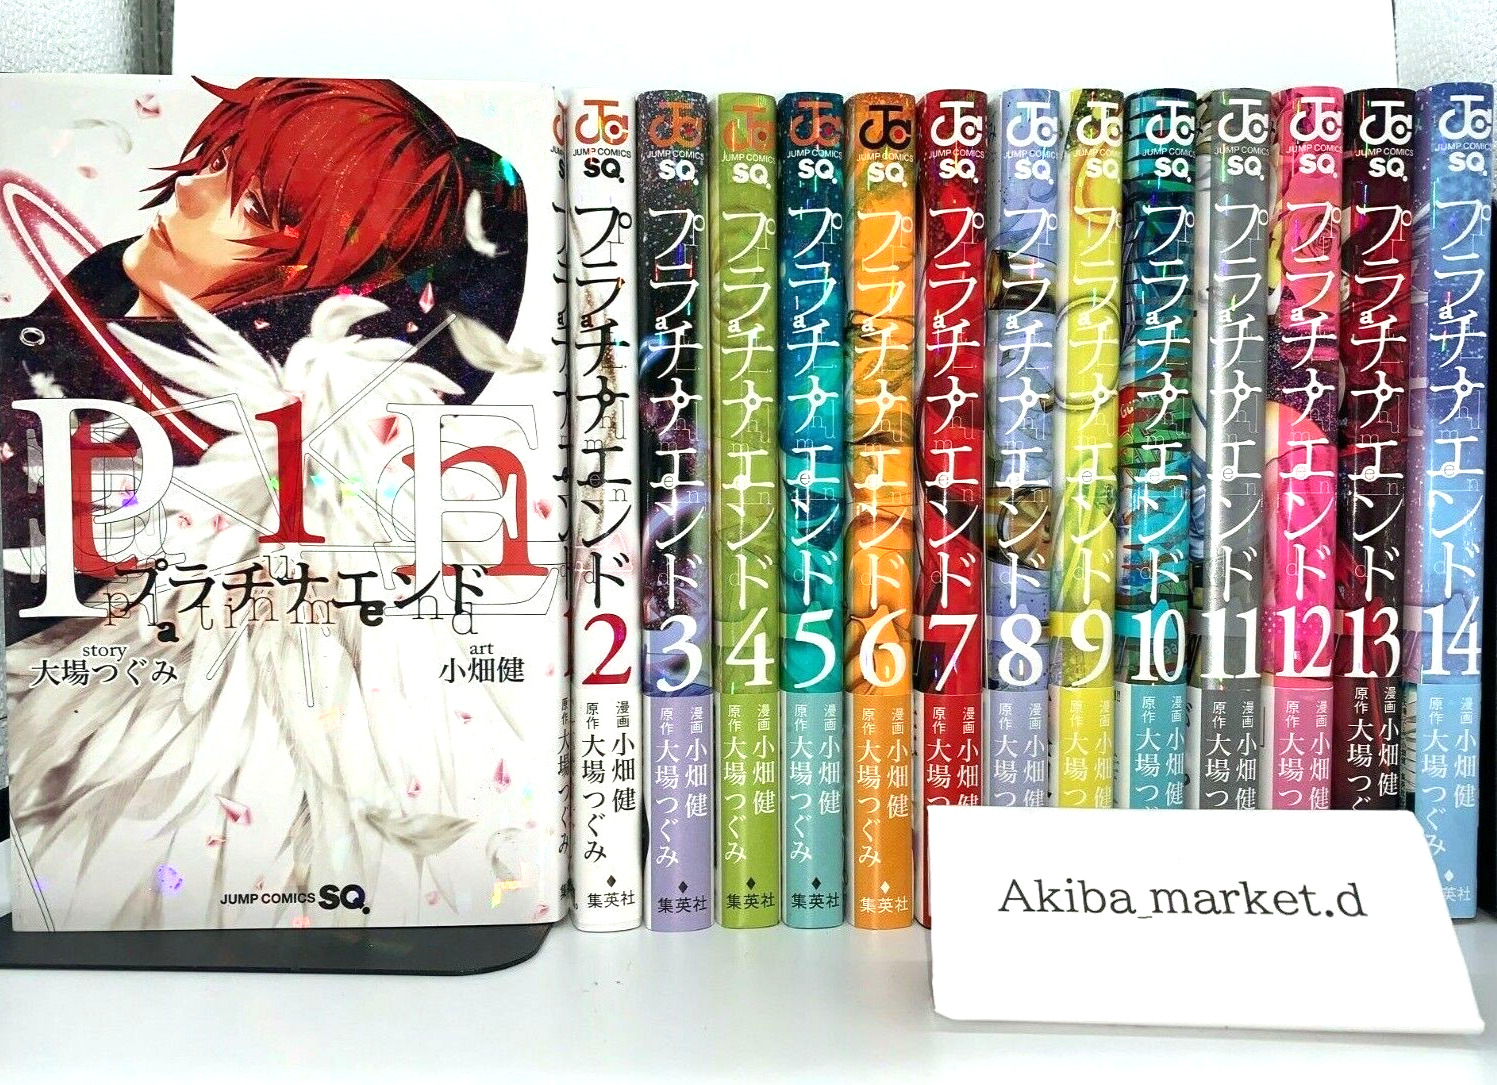 Platinum End 【Japanese language】 Vol.1-14 set Manga Comics DEATHNOTE author